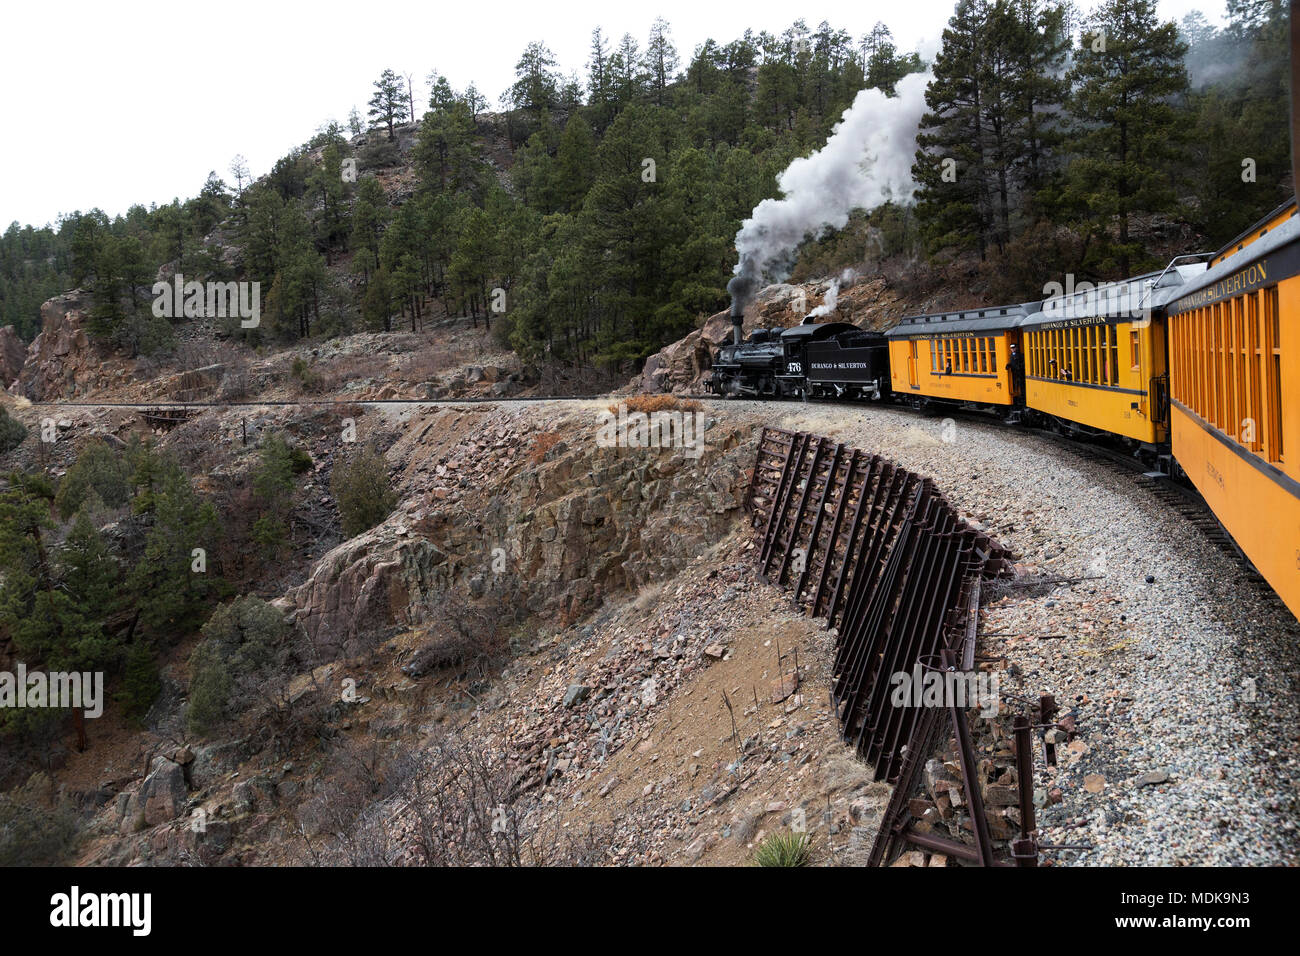 bnsf train in colorado alamy stock photo